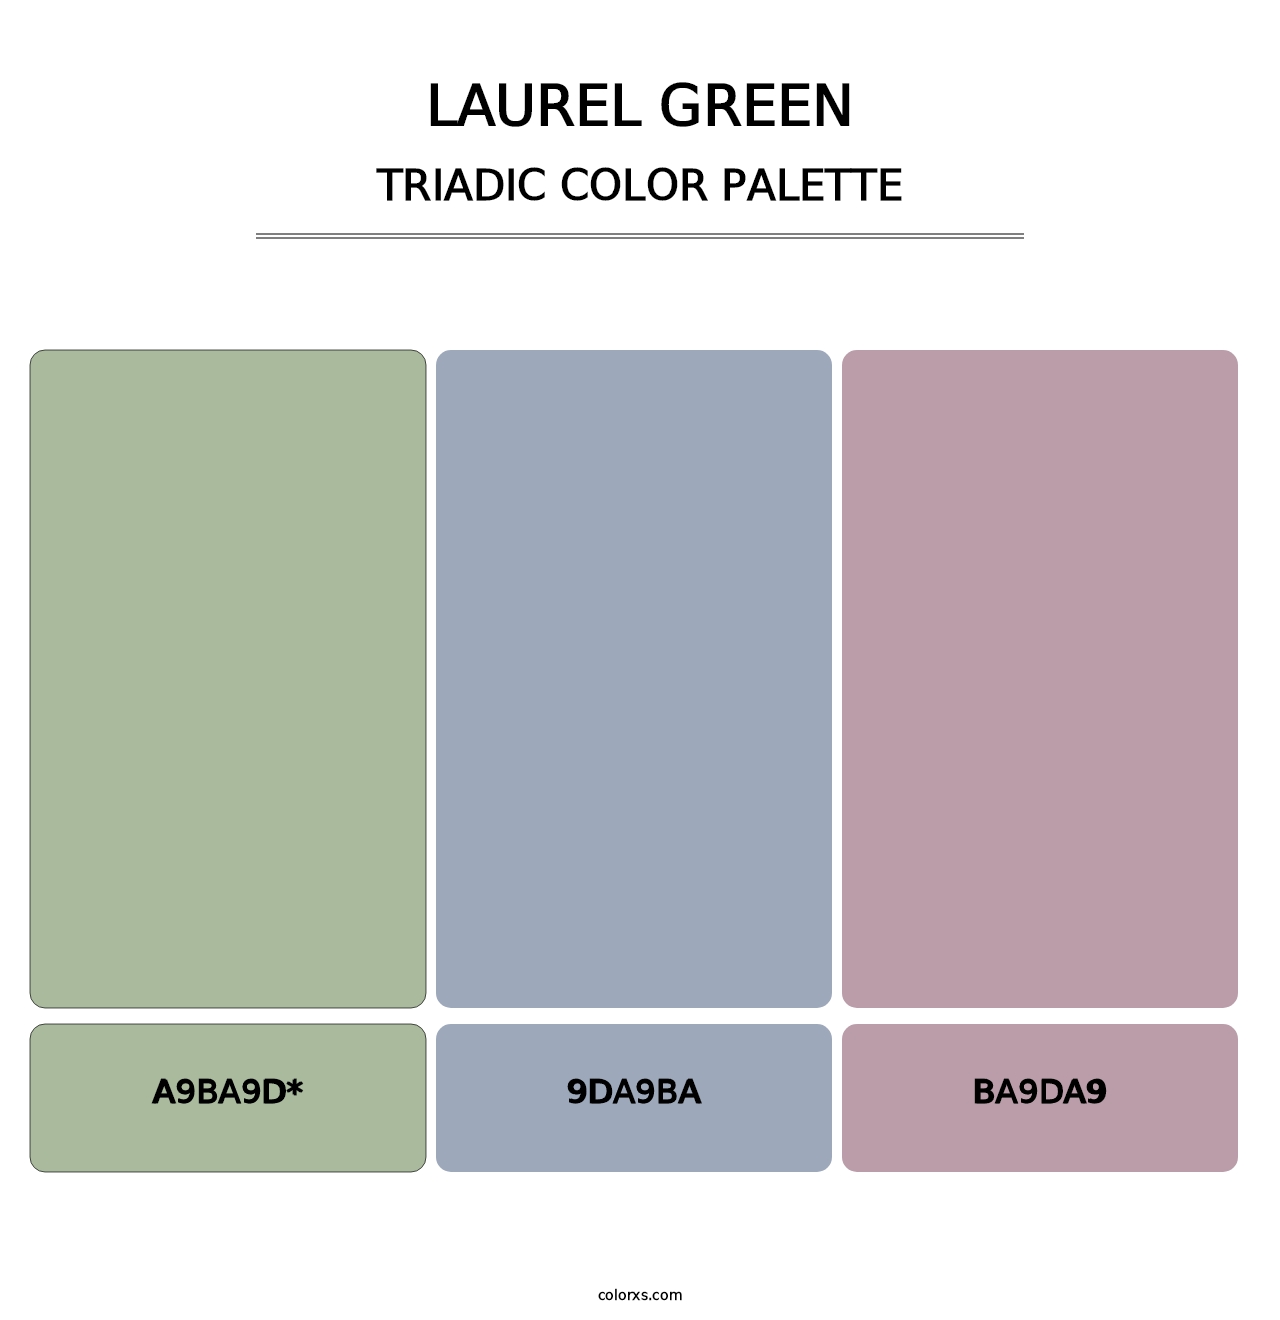 Laurel Green - Triadic Color Palette